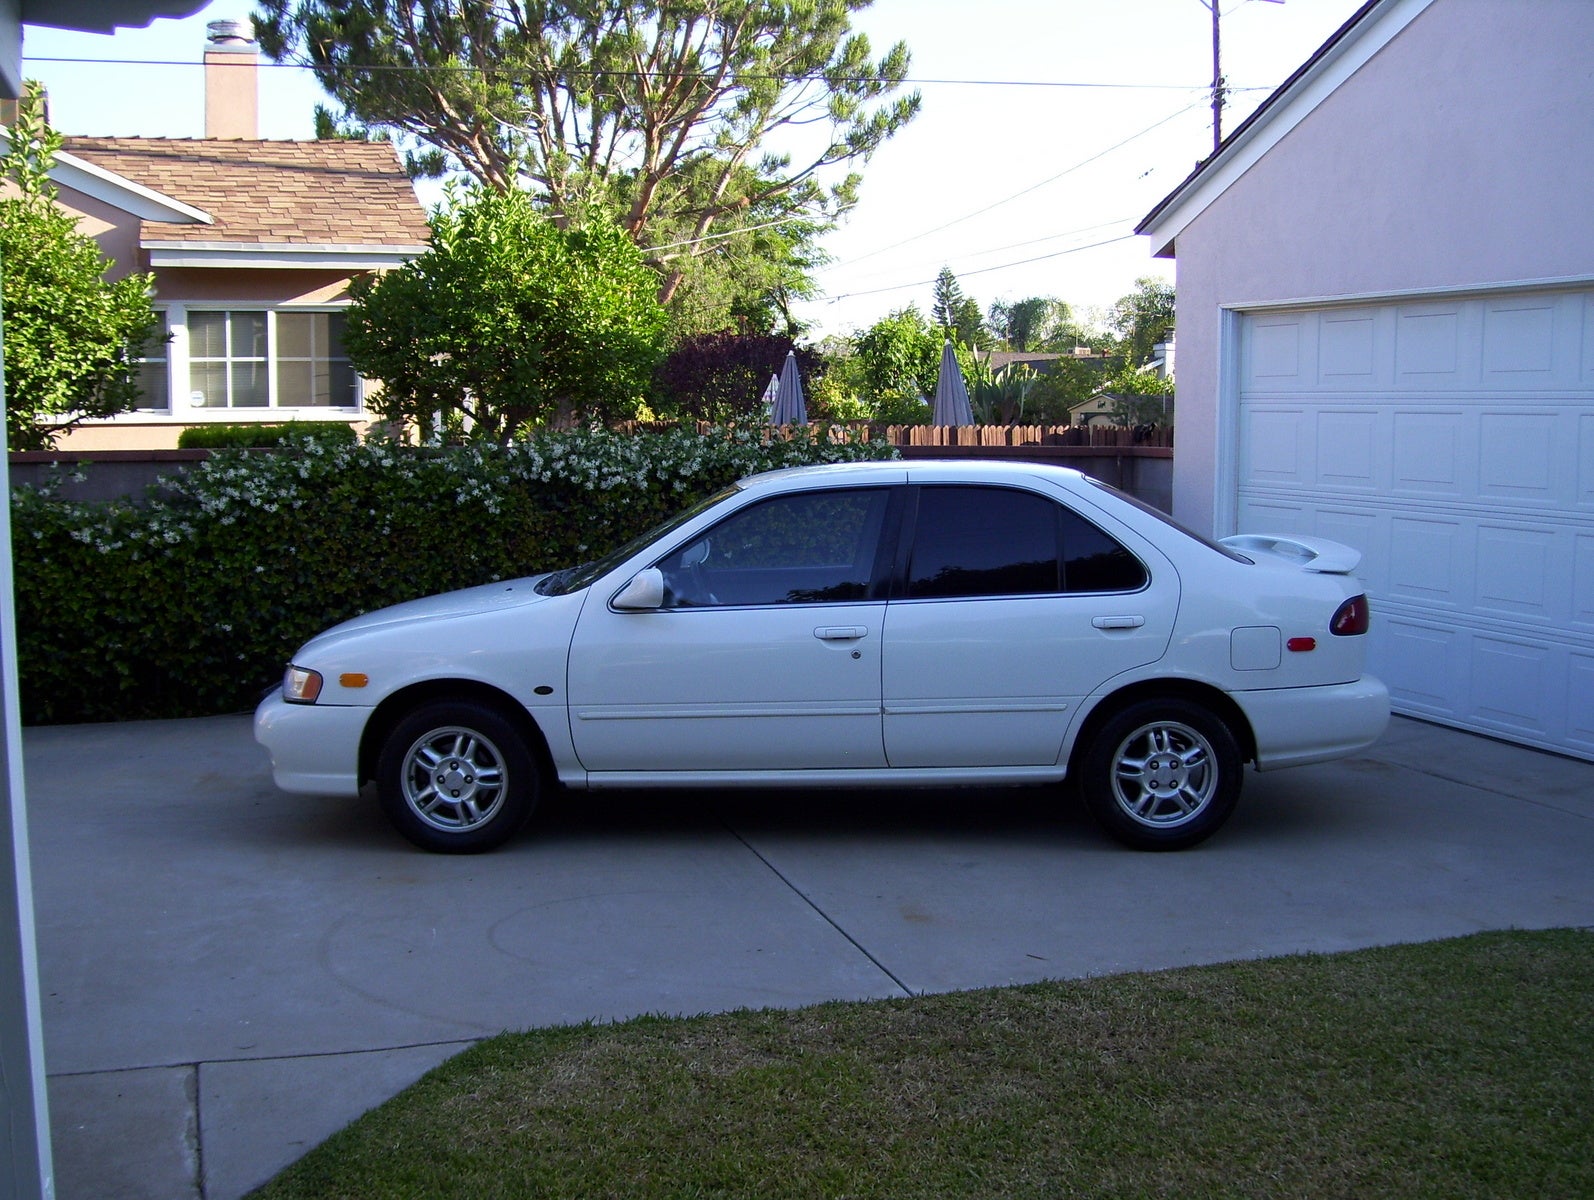 1999 Nissan sentra gxe starter